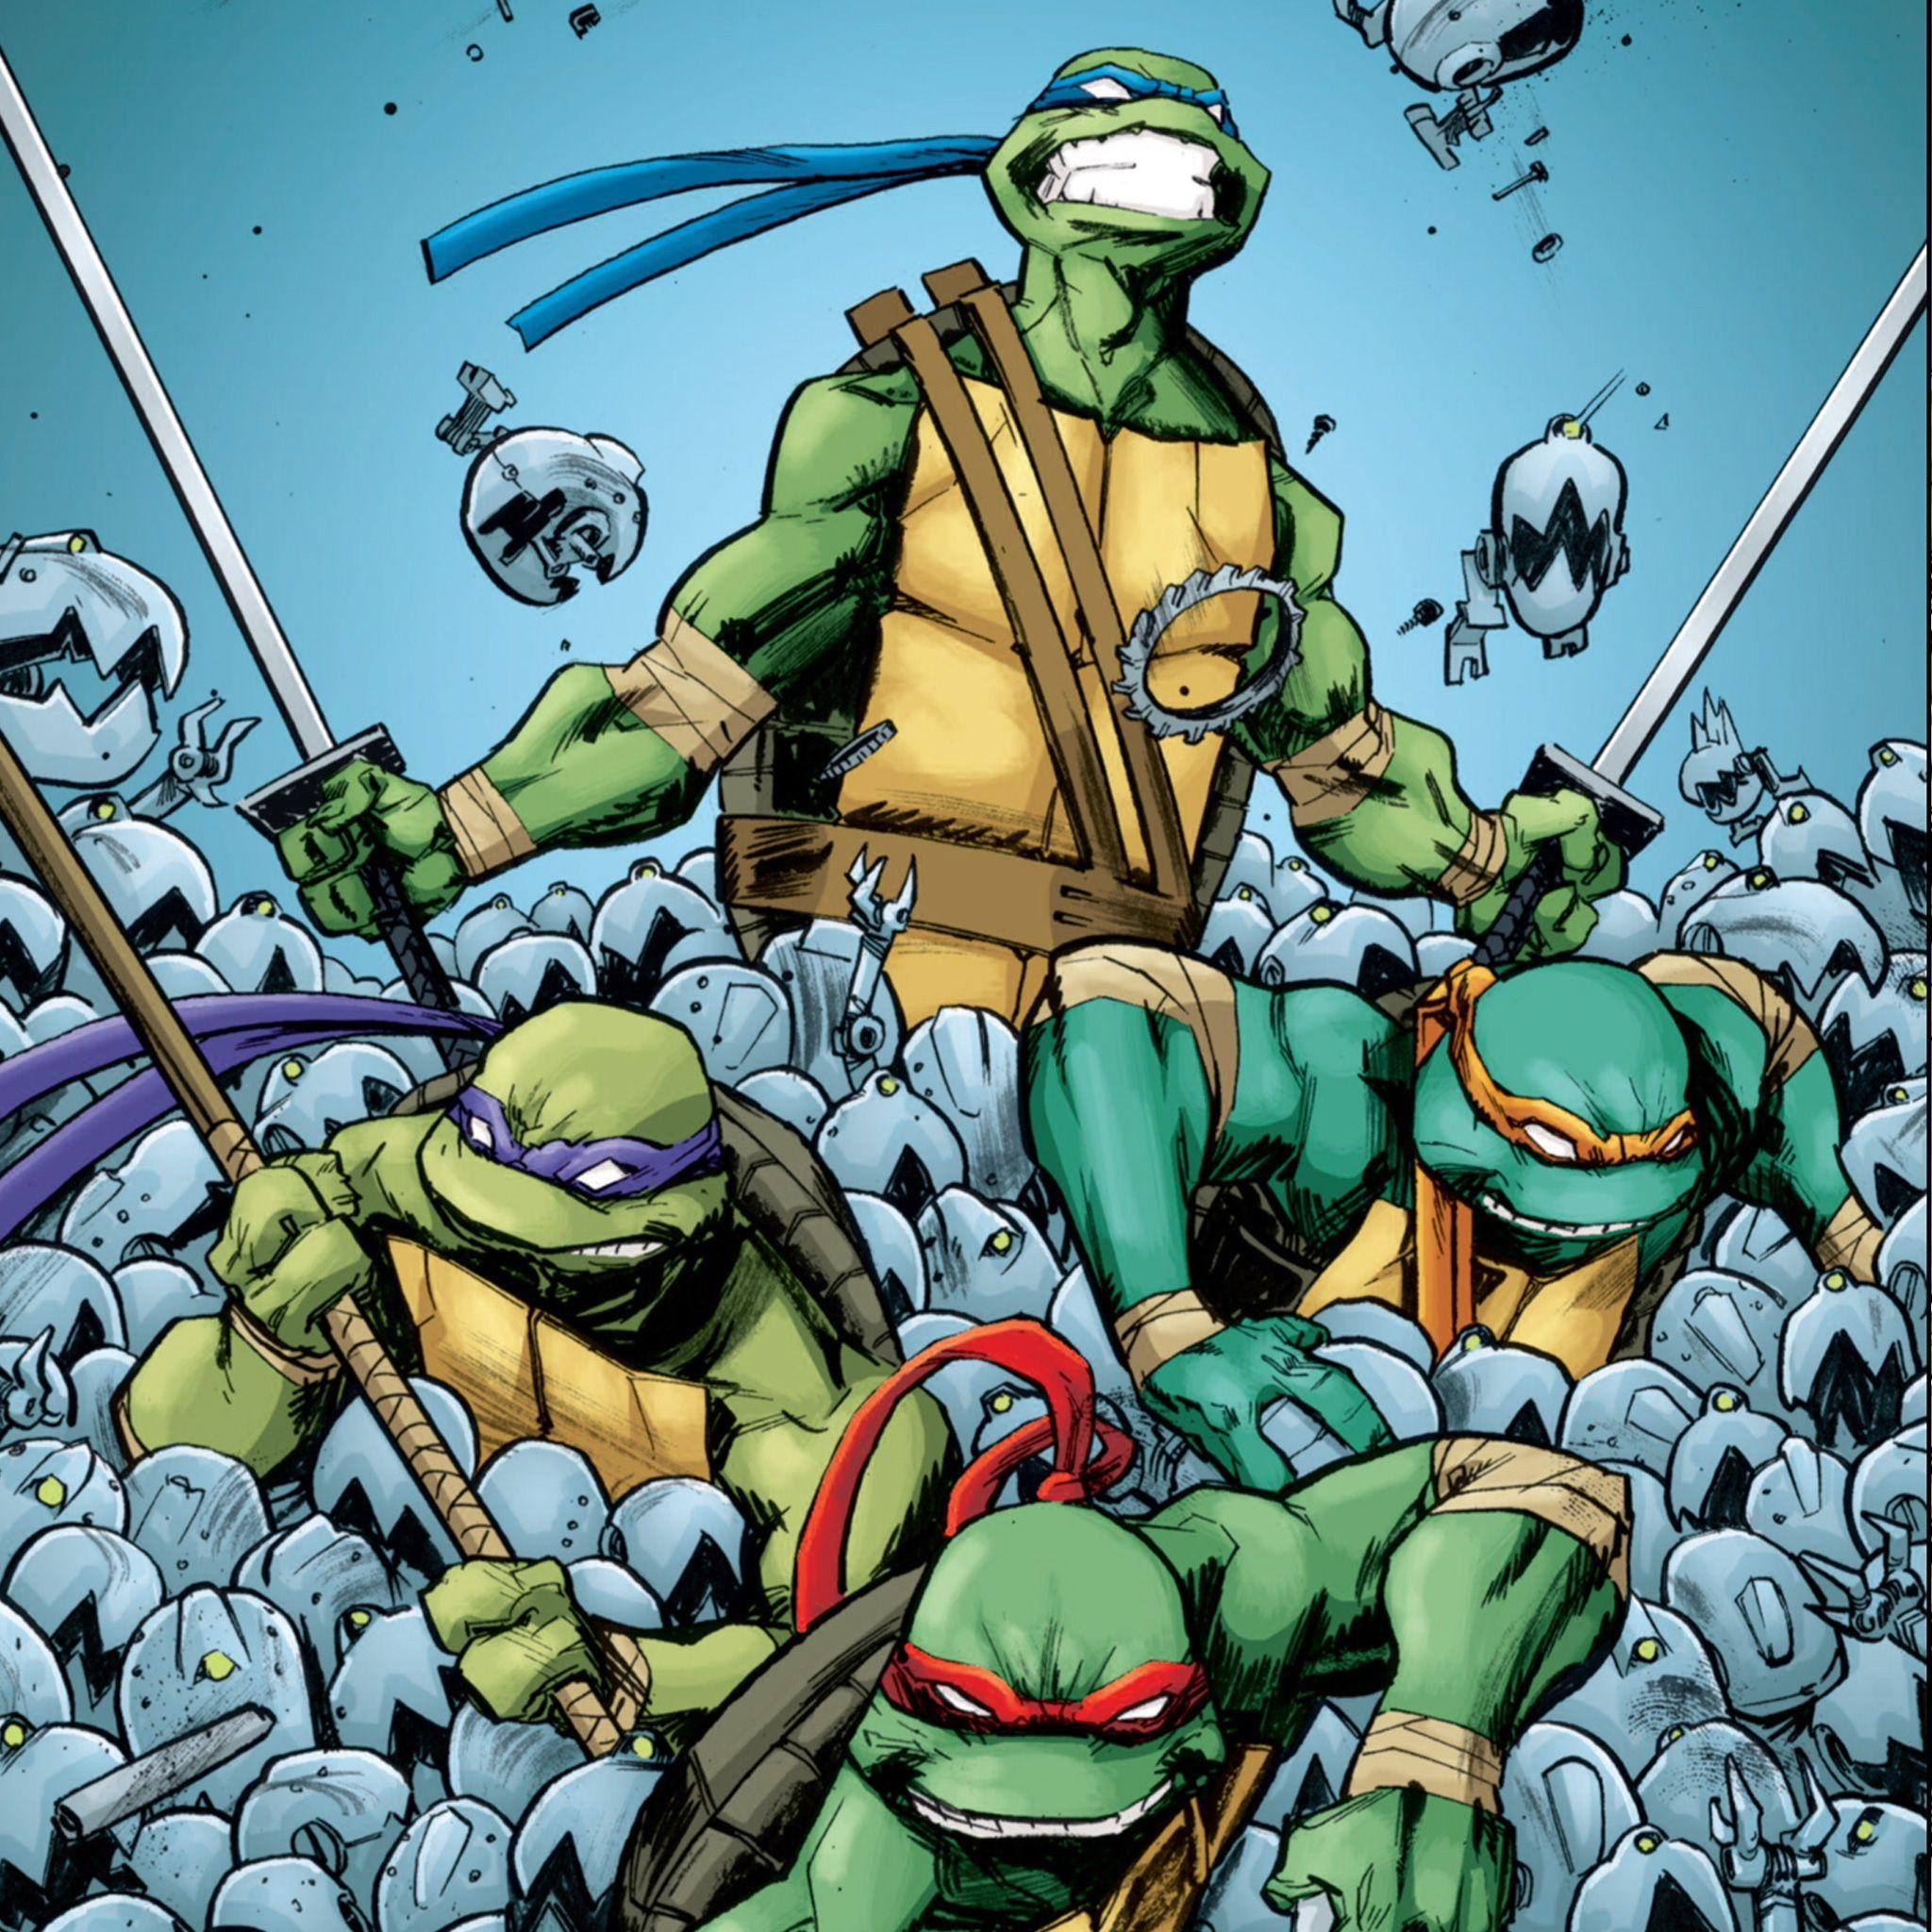 Classic Teenage Mutant Ninja Turtles Wallpaper